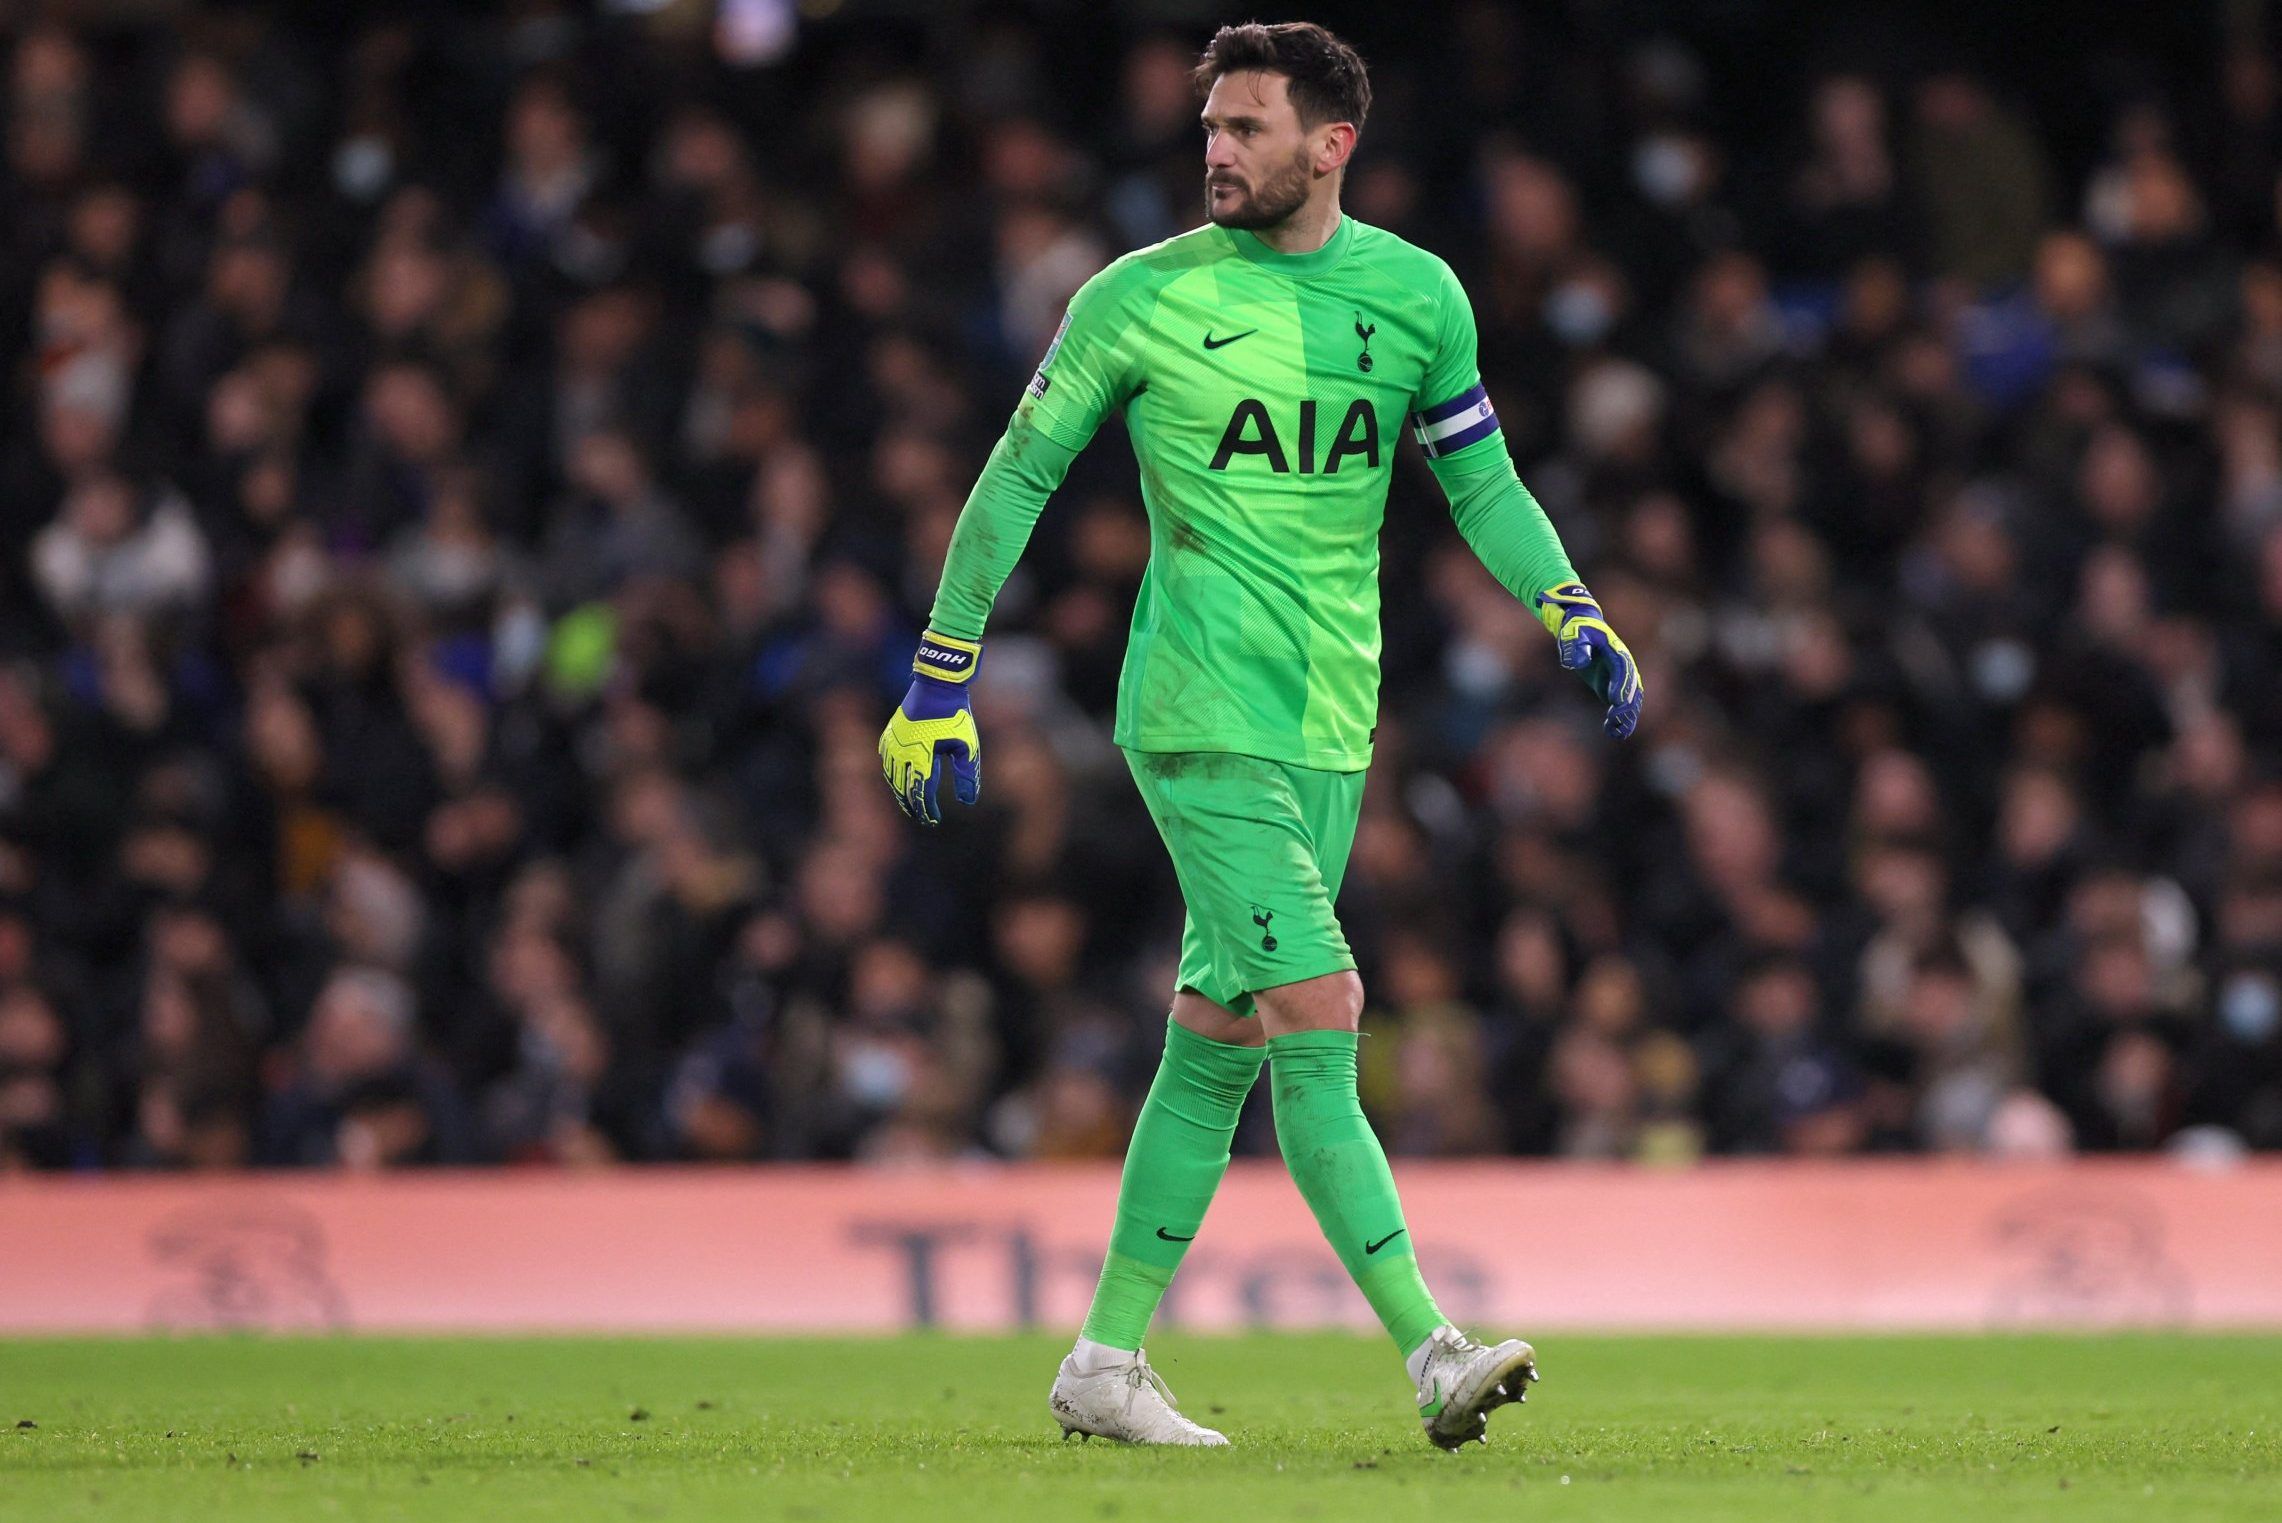 Spurs goalkeeper Hugo Lloris looks on during Chelsea clash